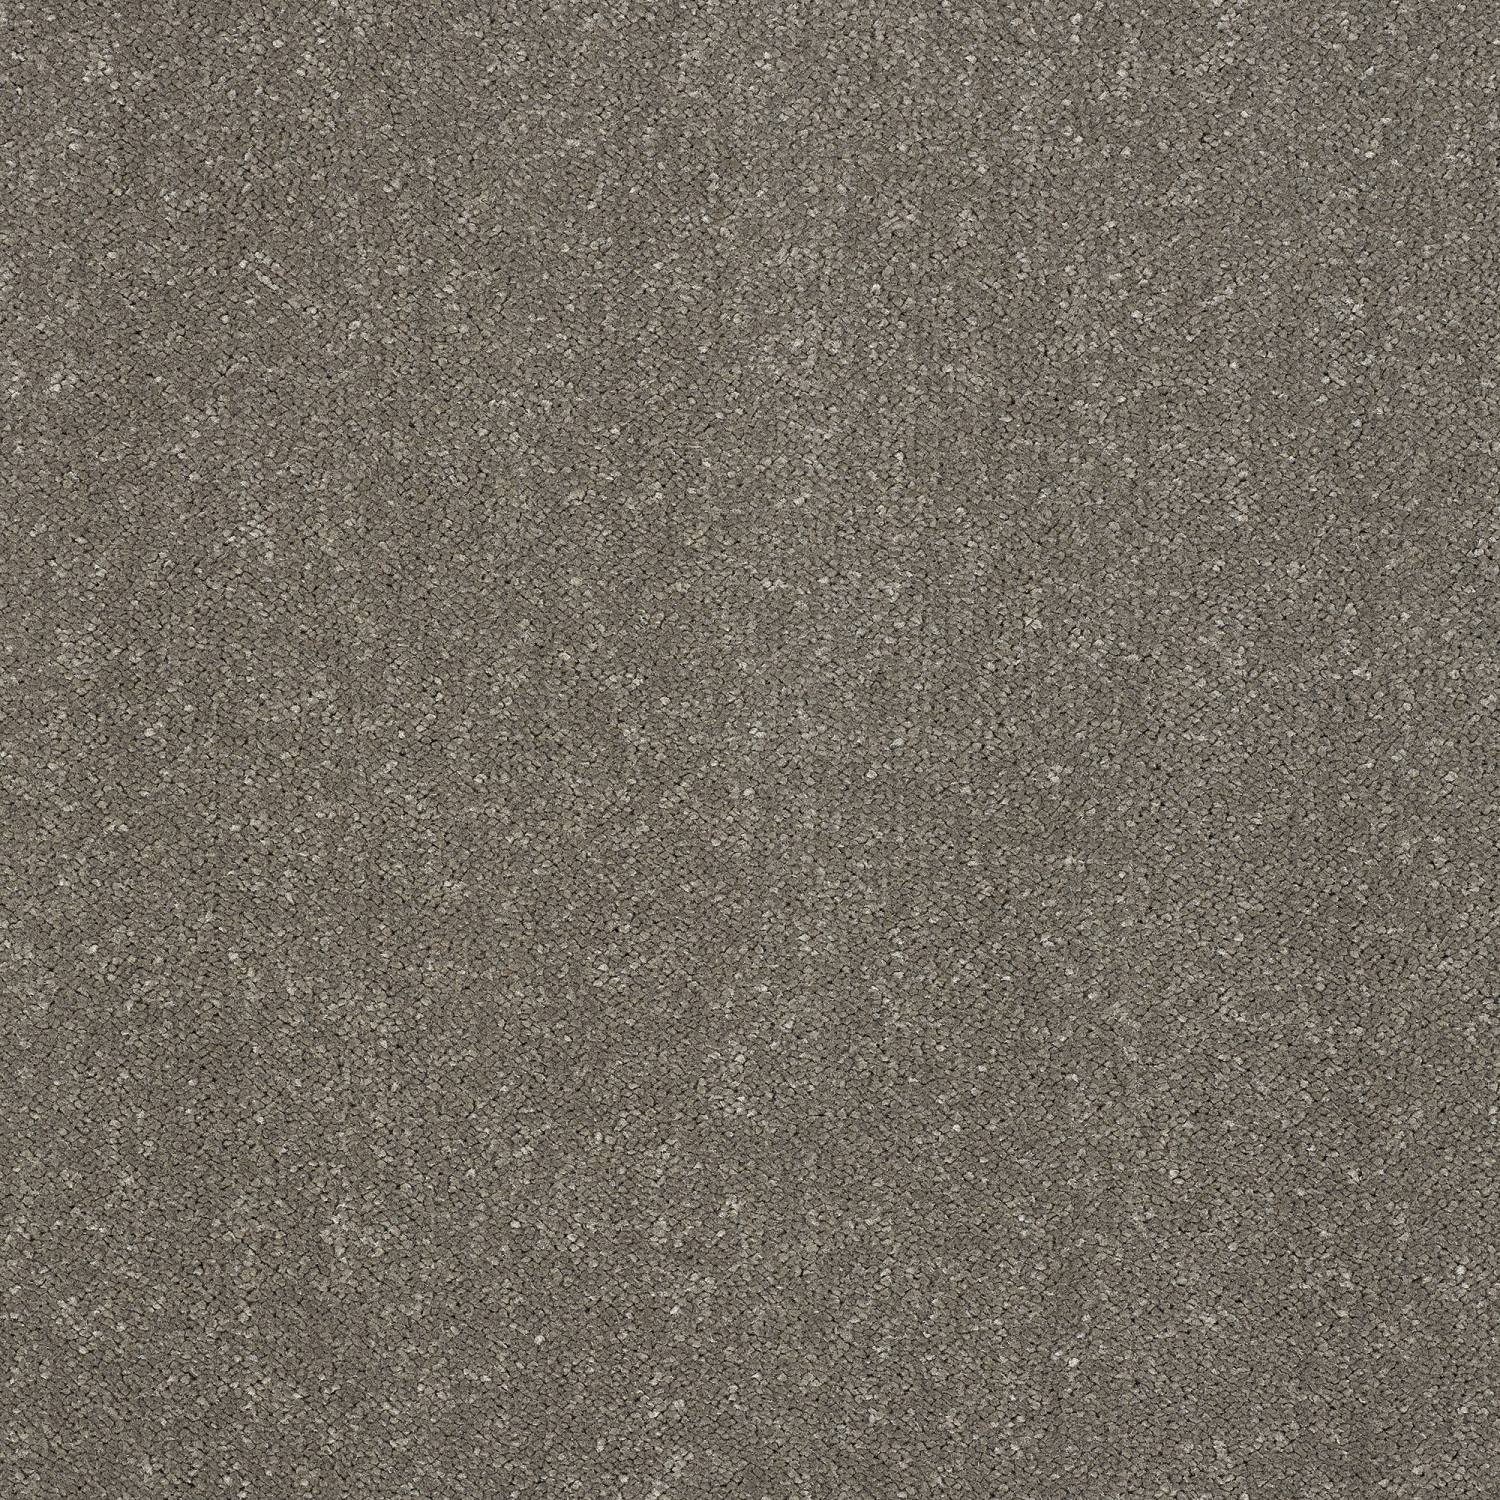 Stainfree Captivation Twist Carpet - Seneca Rock